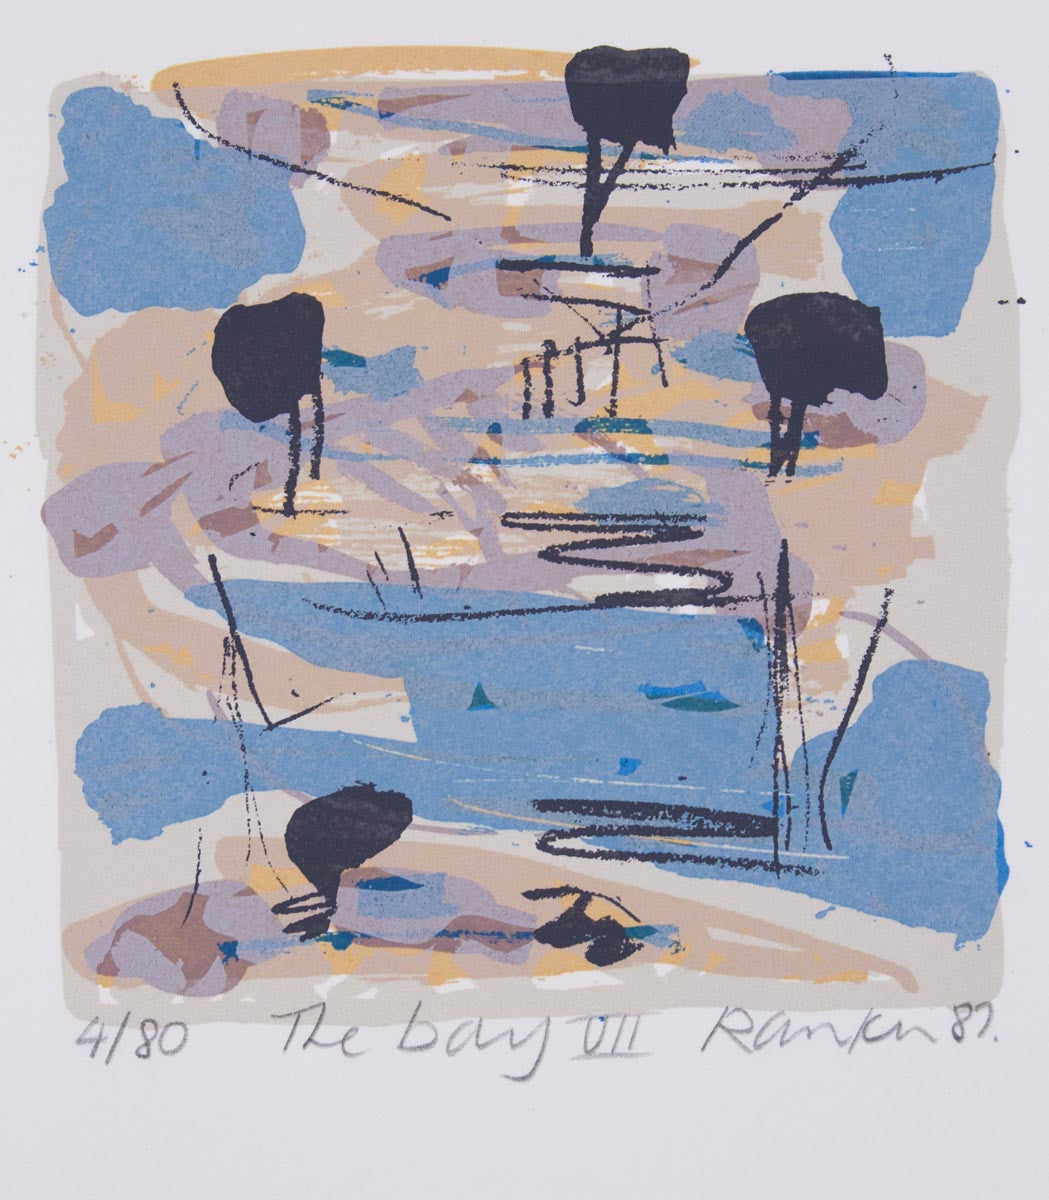 David Rankin 'The Bay VII' - screenprint on paper